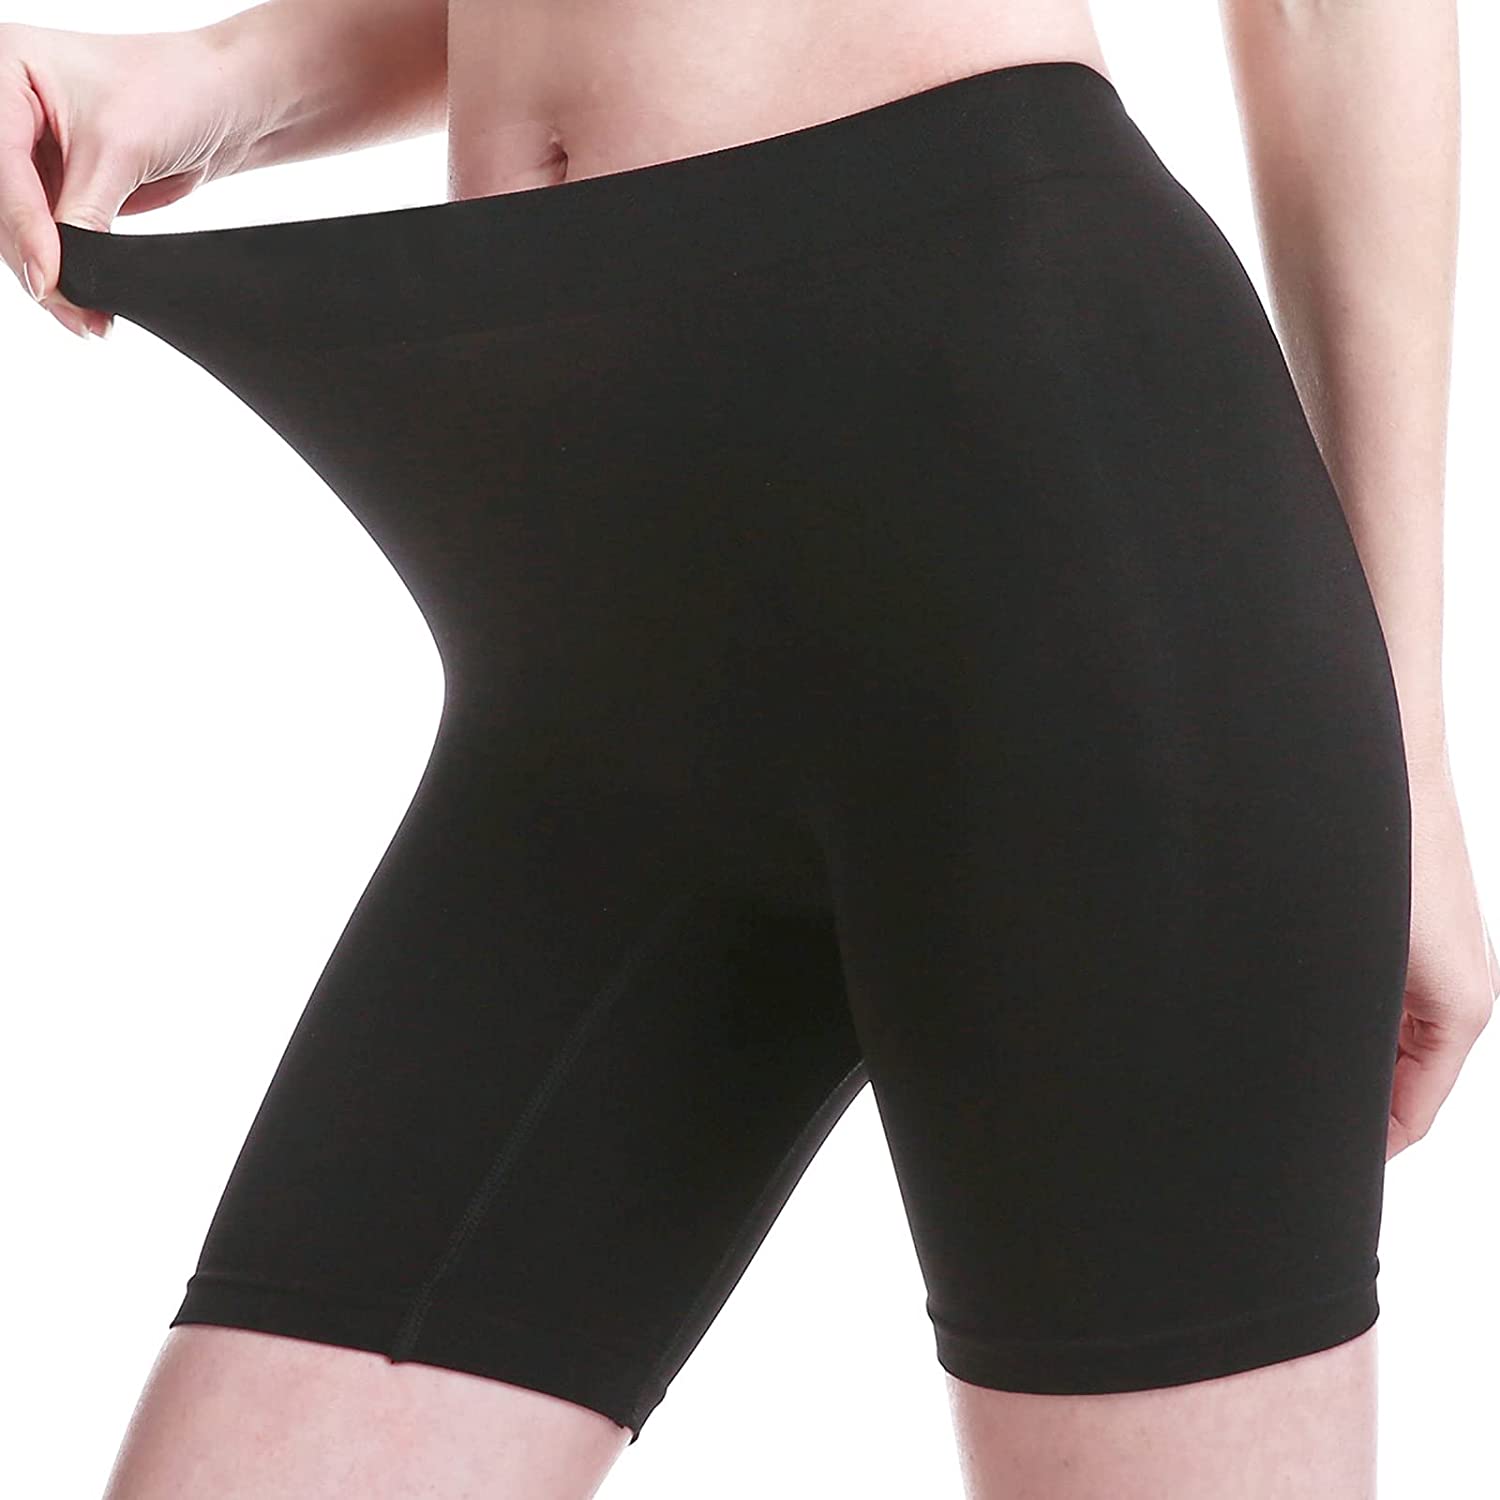 MELERIO Women's Slip Shorts, Comfortable Boyshorts Panties, - Import It All